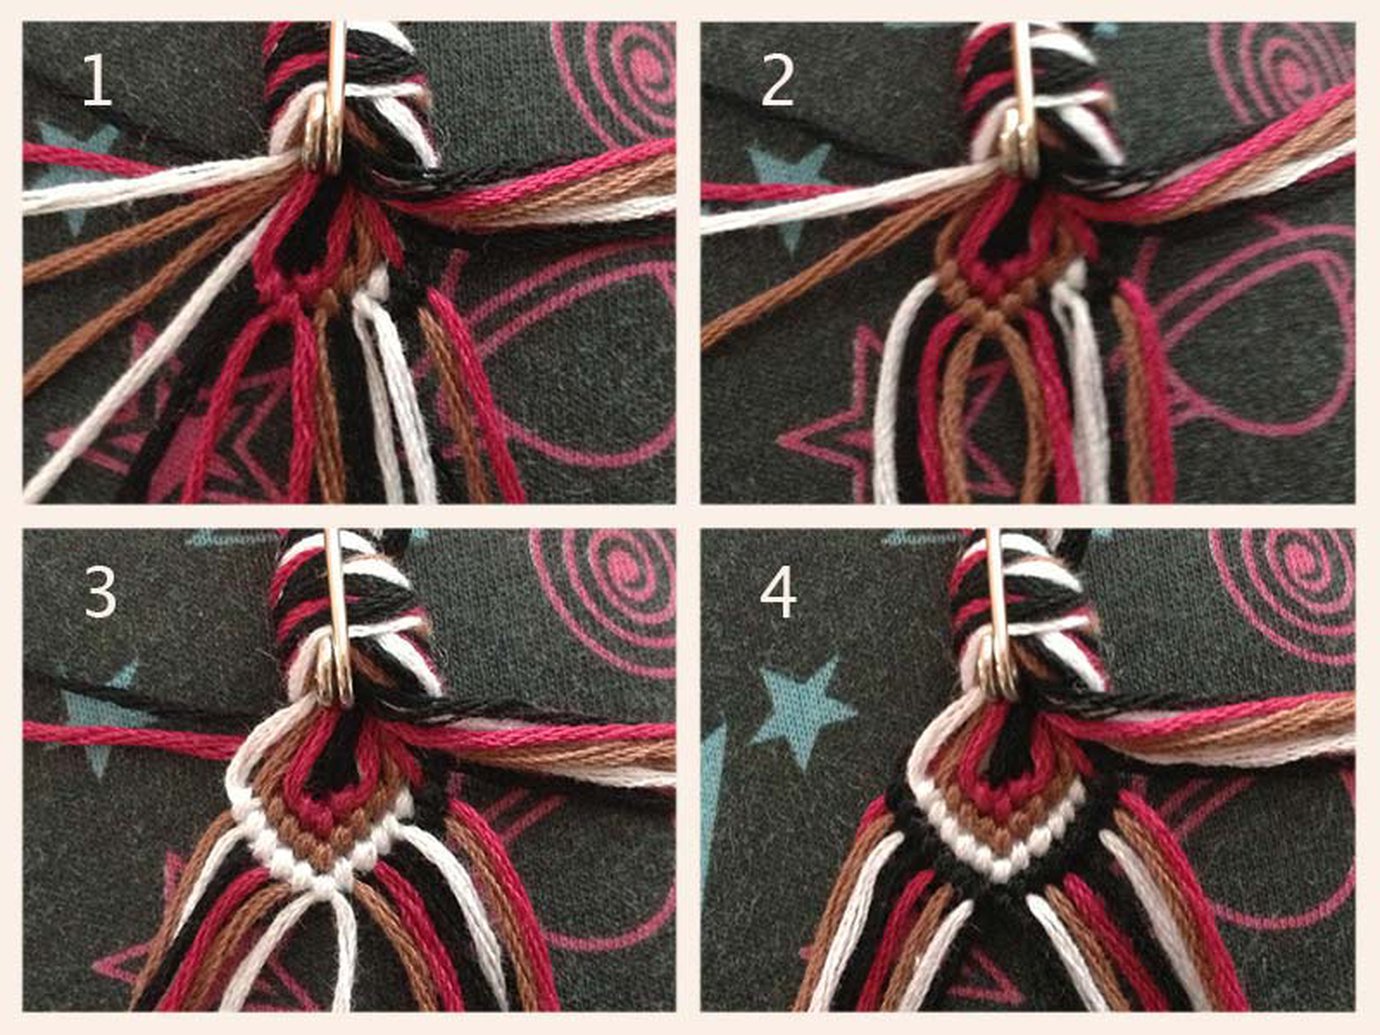 How to start a thicker bracelet (20+ strings) tutorial | BraceletBook